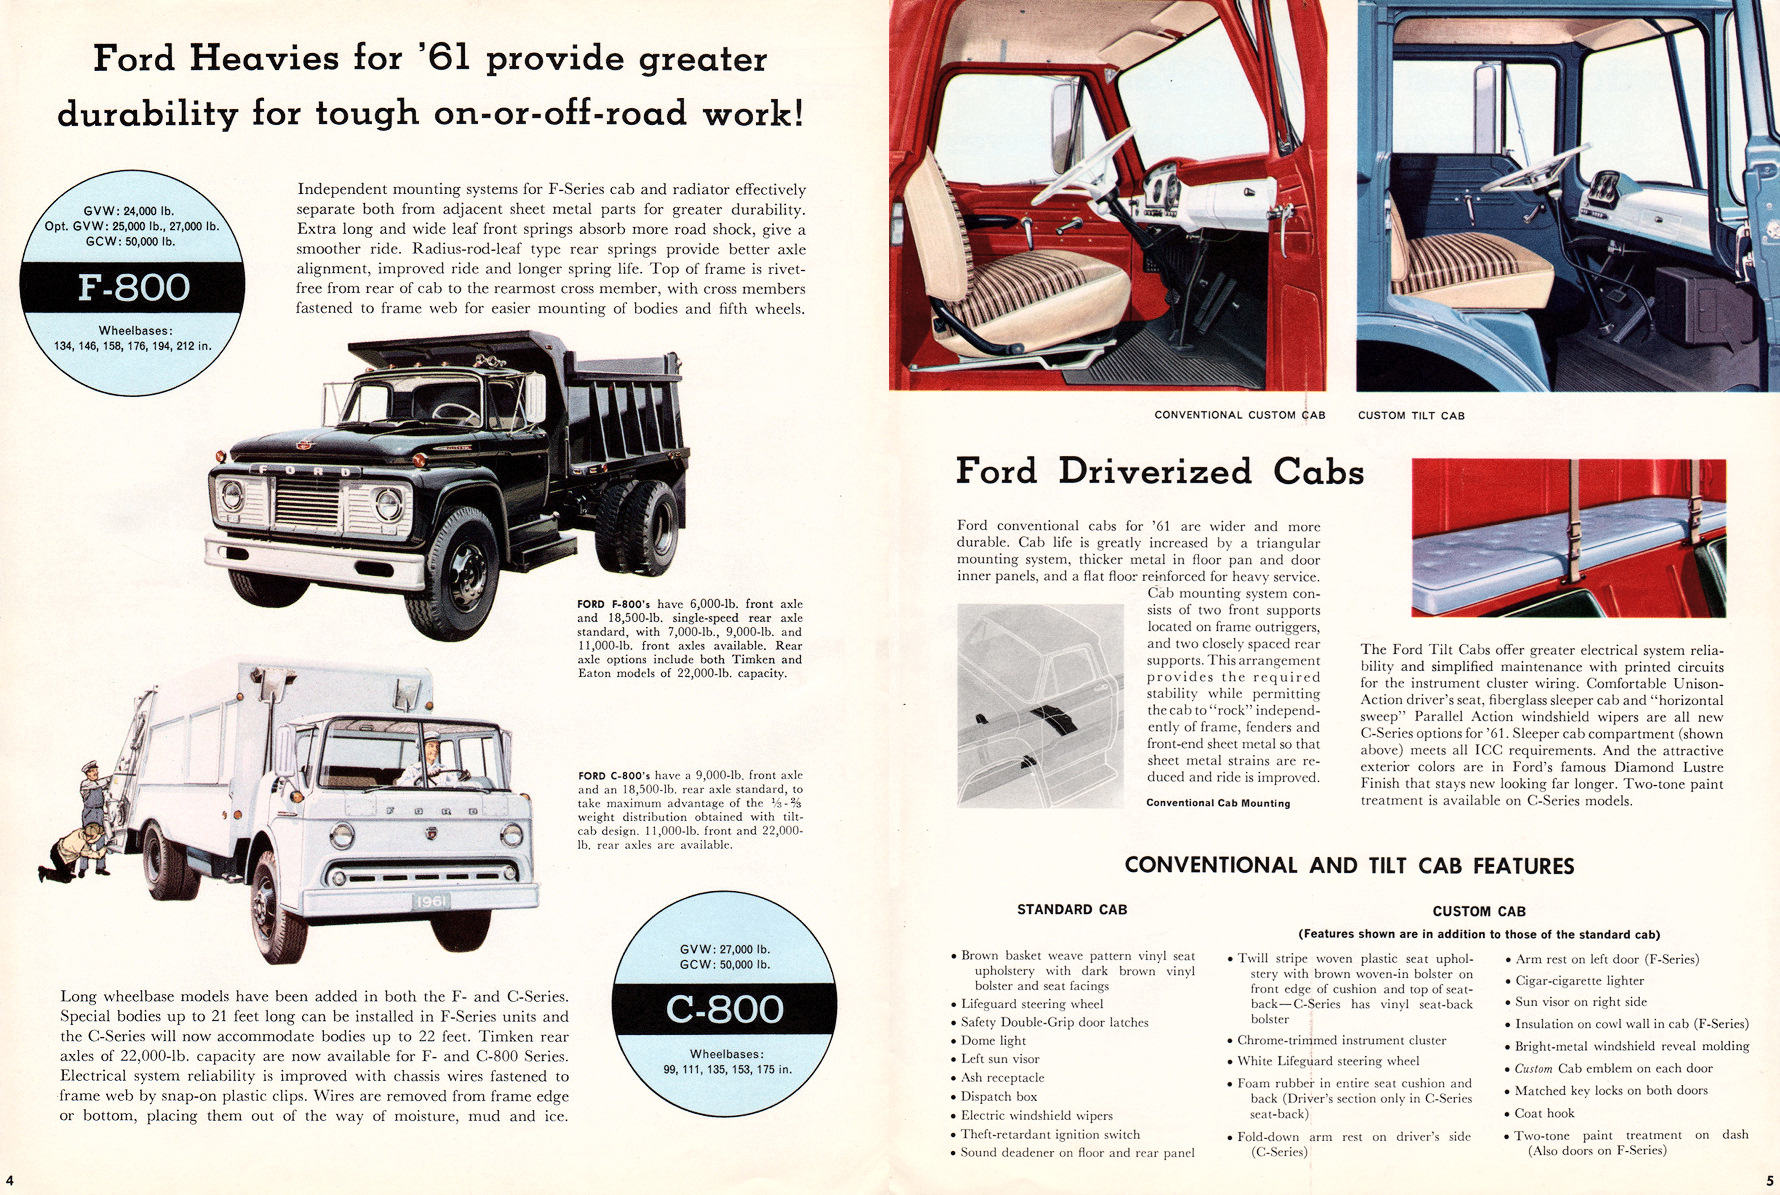 1961_Ford_Heavy_Duty_Trucks_Rev-04-05